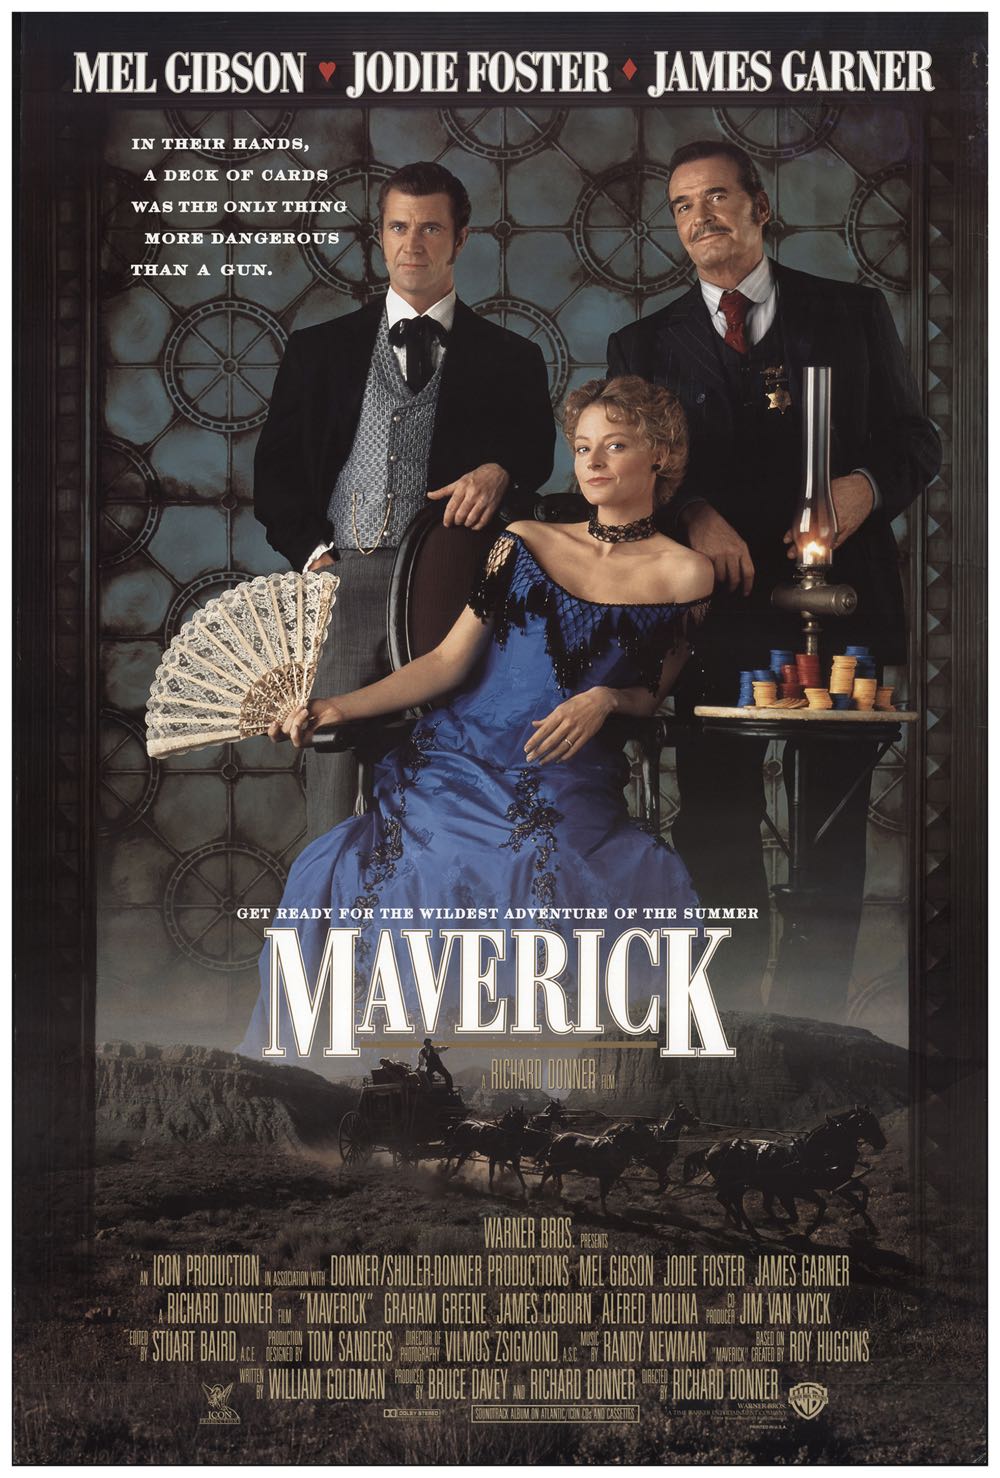 Maverick DVD movie collectible [Barcode 883929084739] - Main Image 3